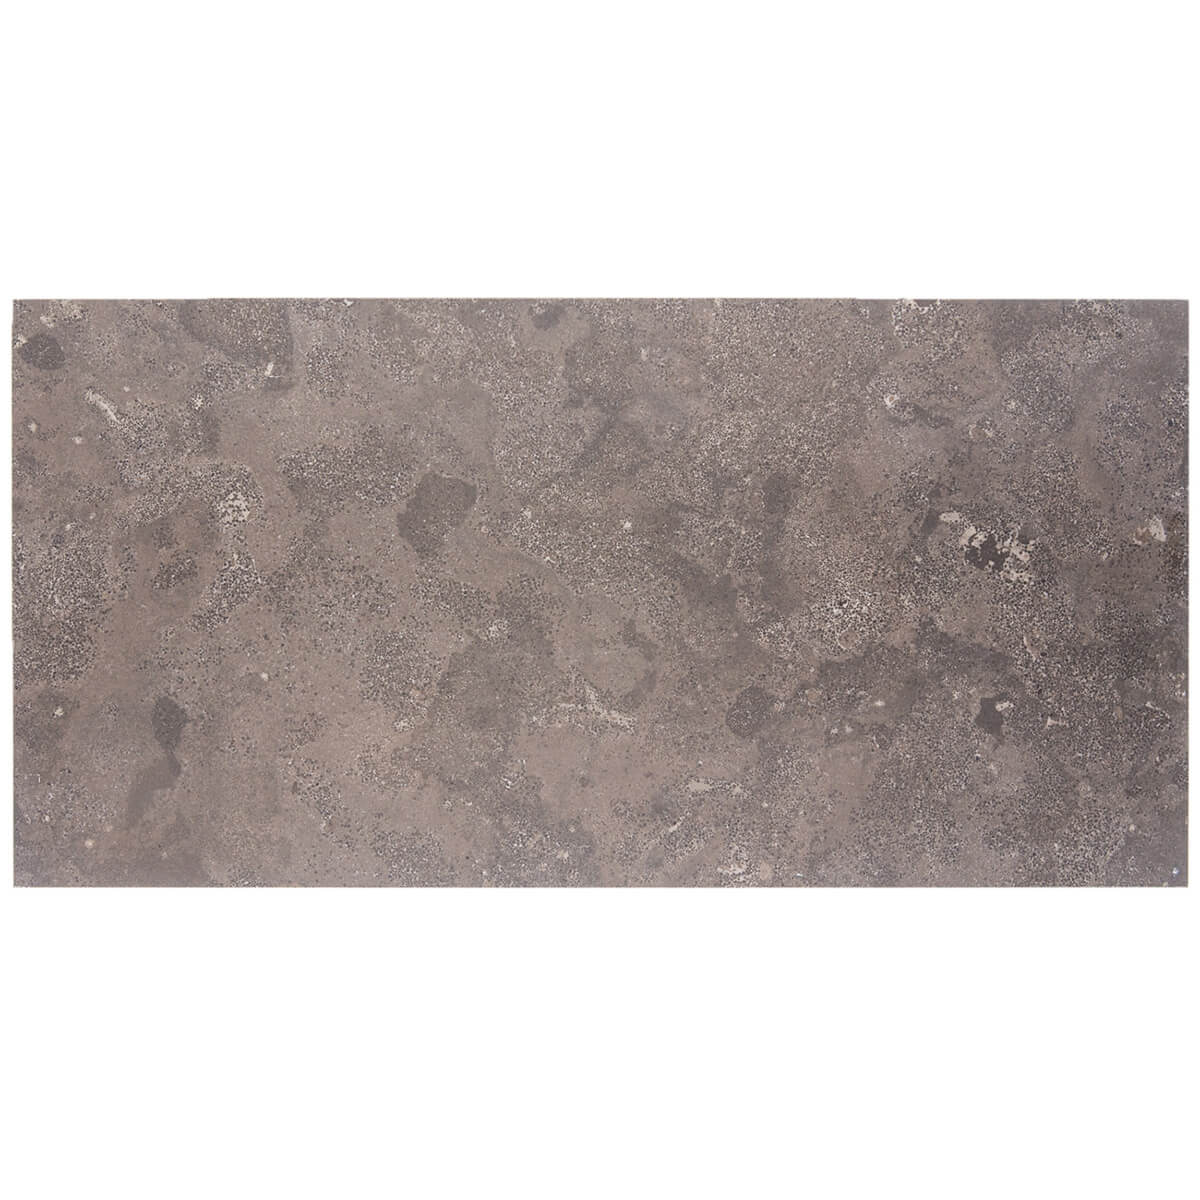 haussmann pierre noire limestone rectangle natural stone field tile 12x24 honed